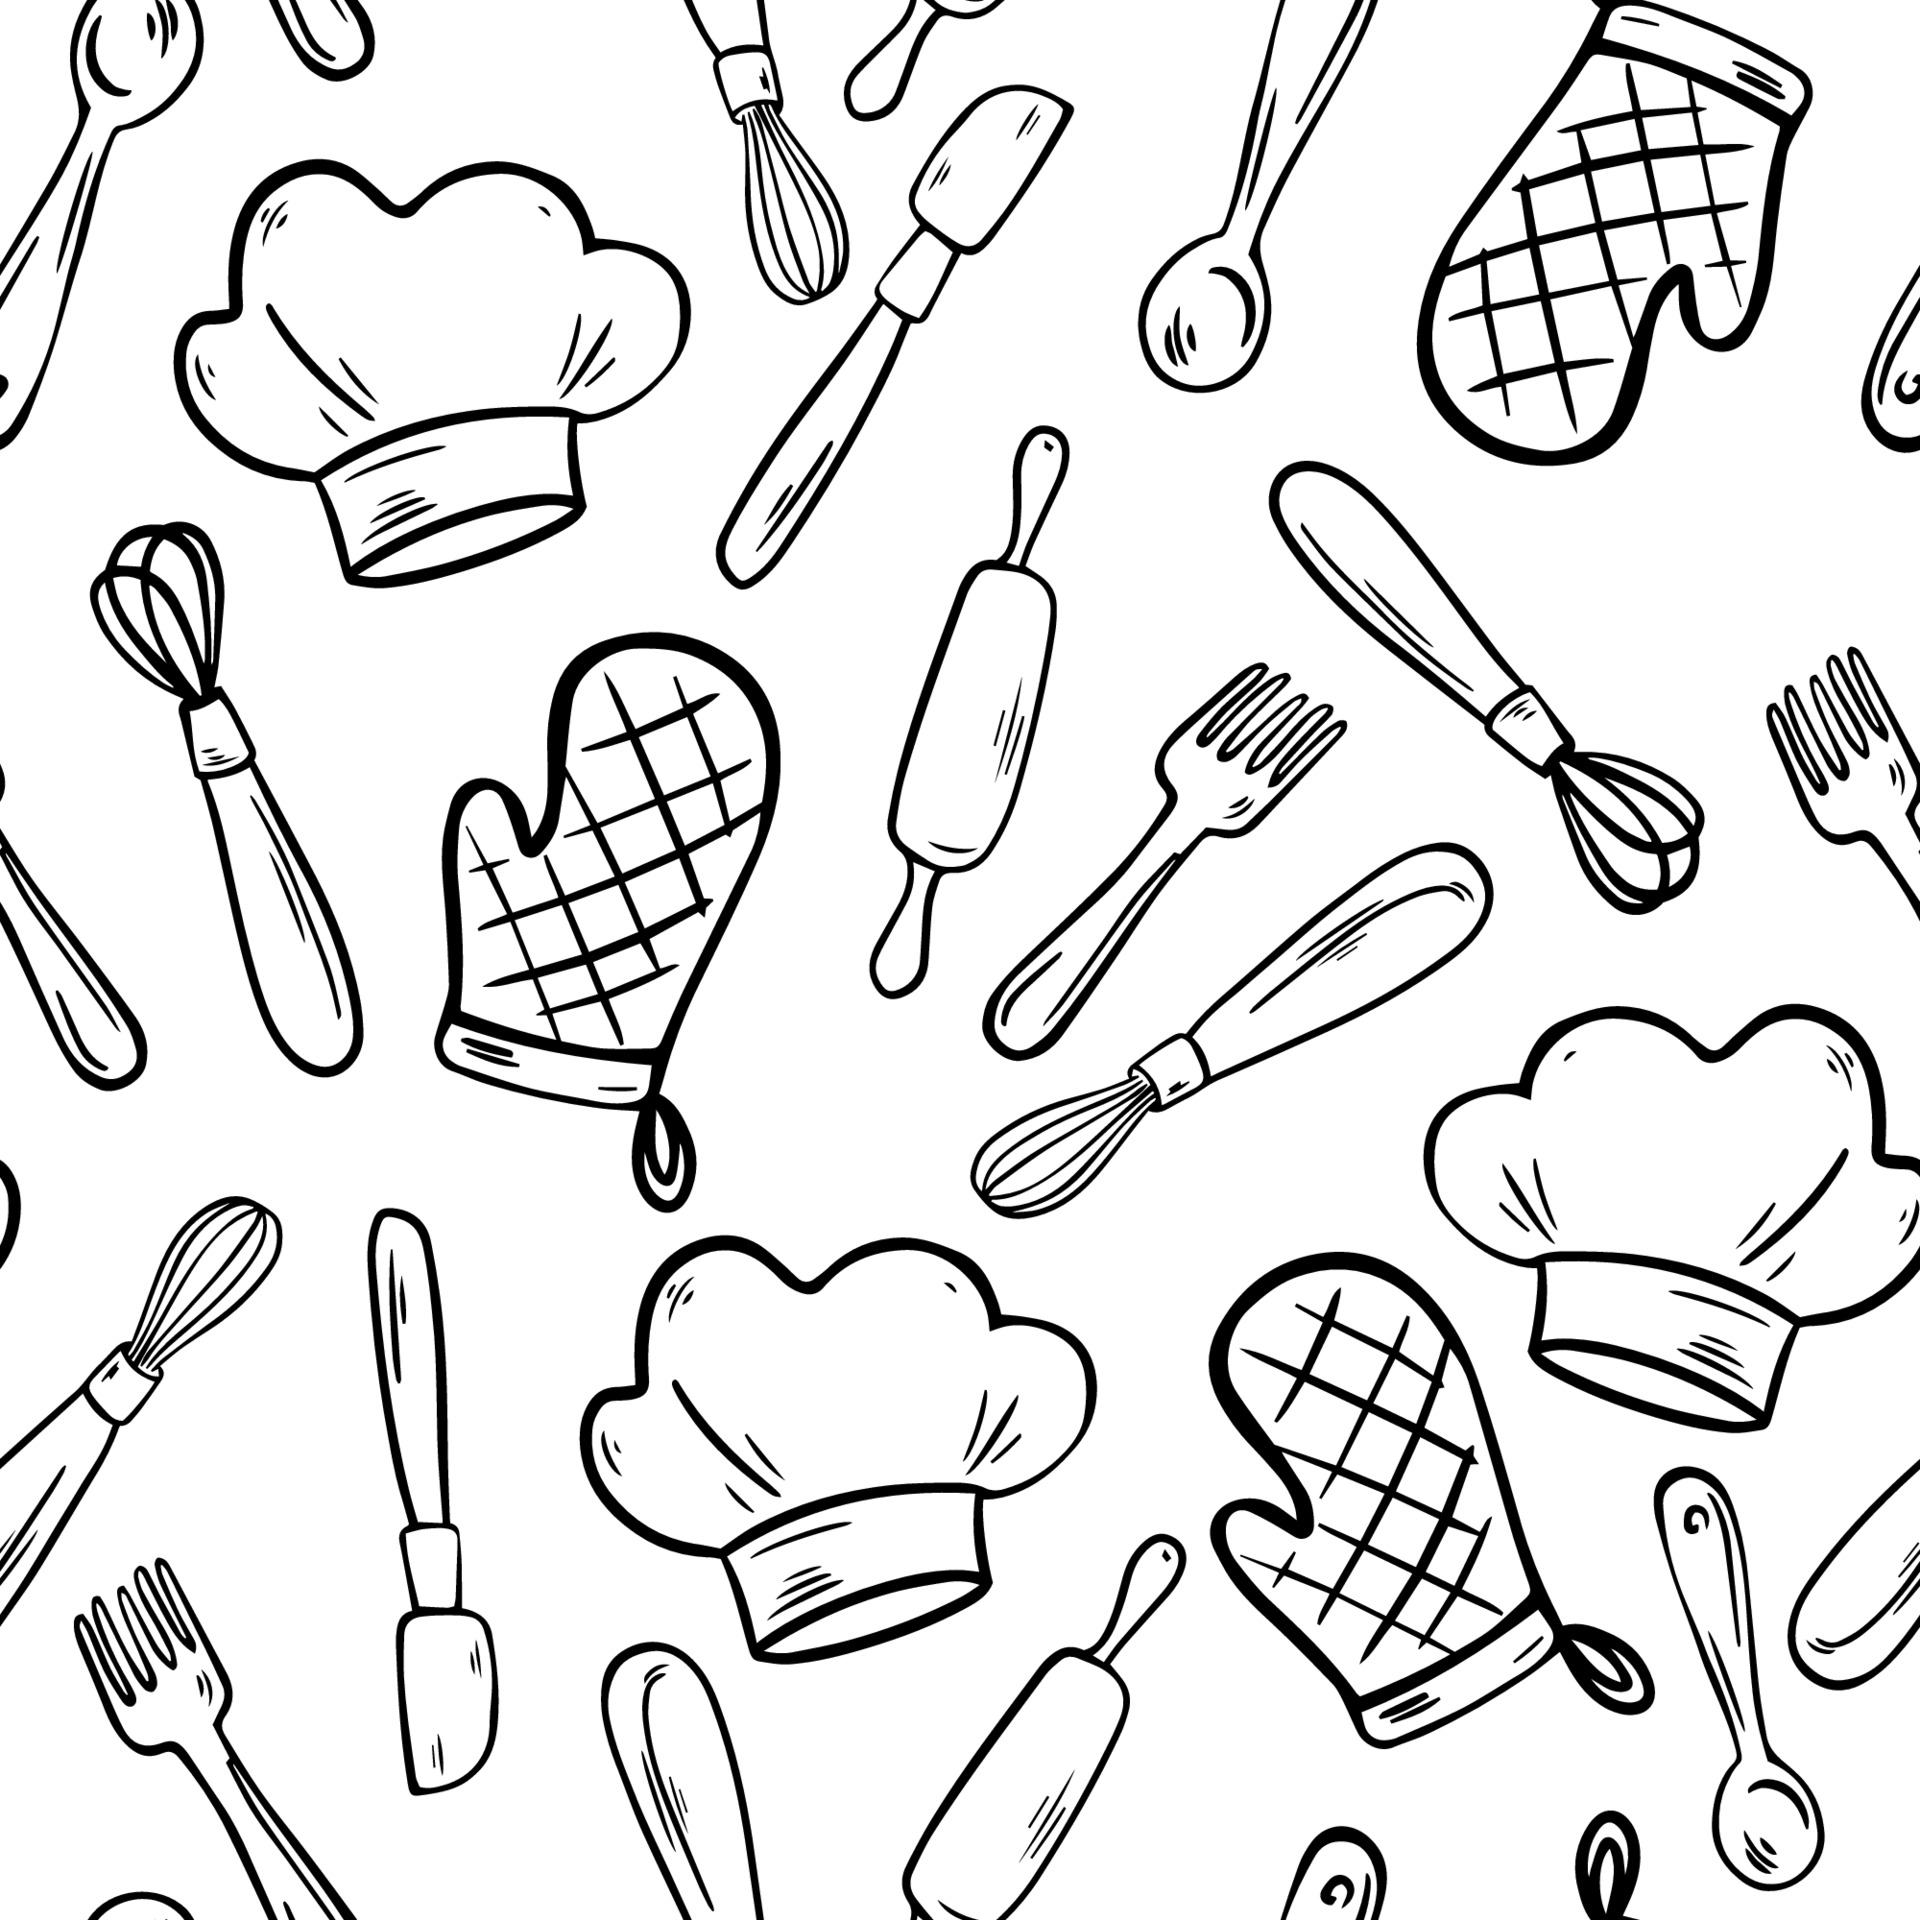 https://static.vecteezy.com/system/resources/previews/003/285/979/original/kitchen-tools-seamless-pattern-doodle-kitchen-stuff-vector.jpg